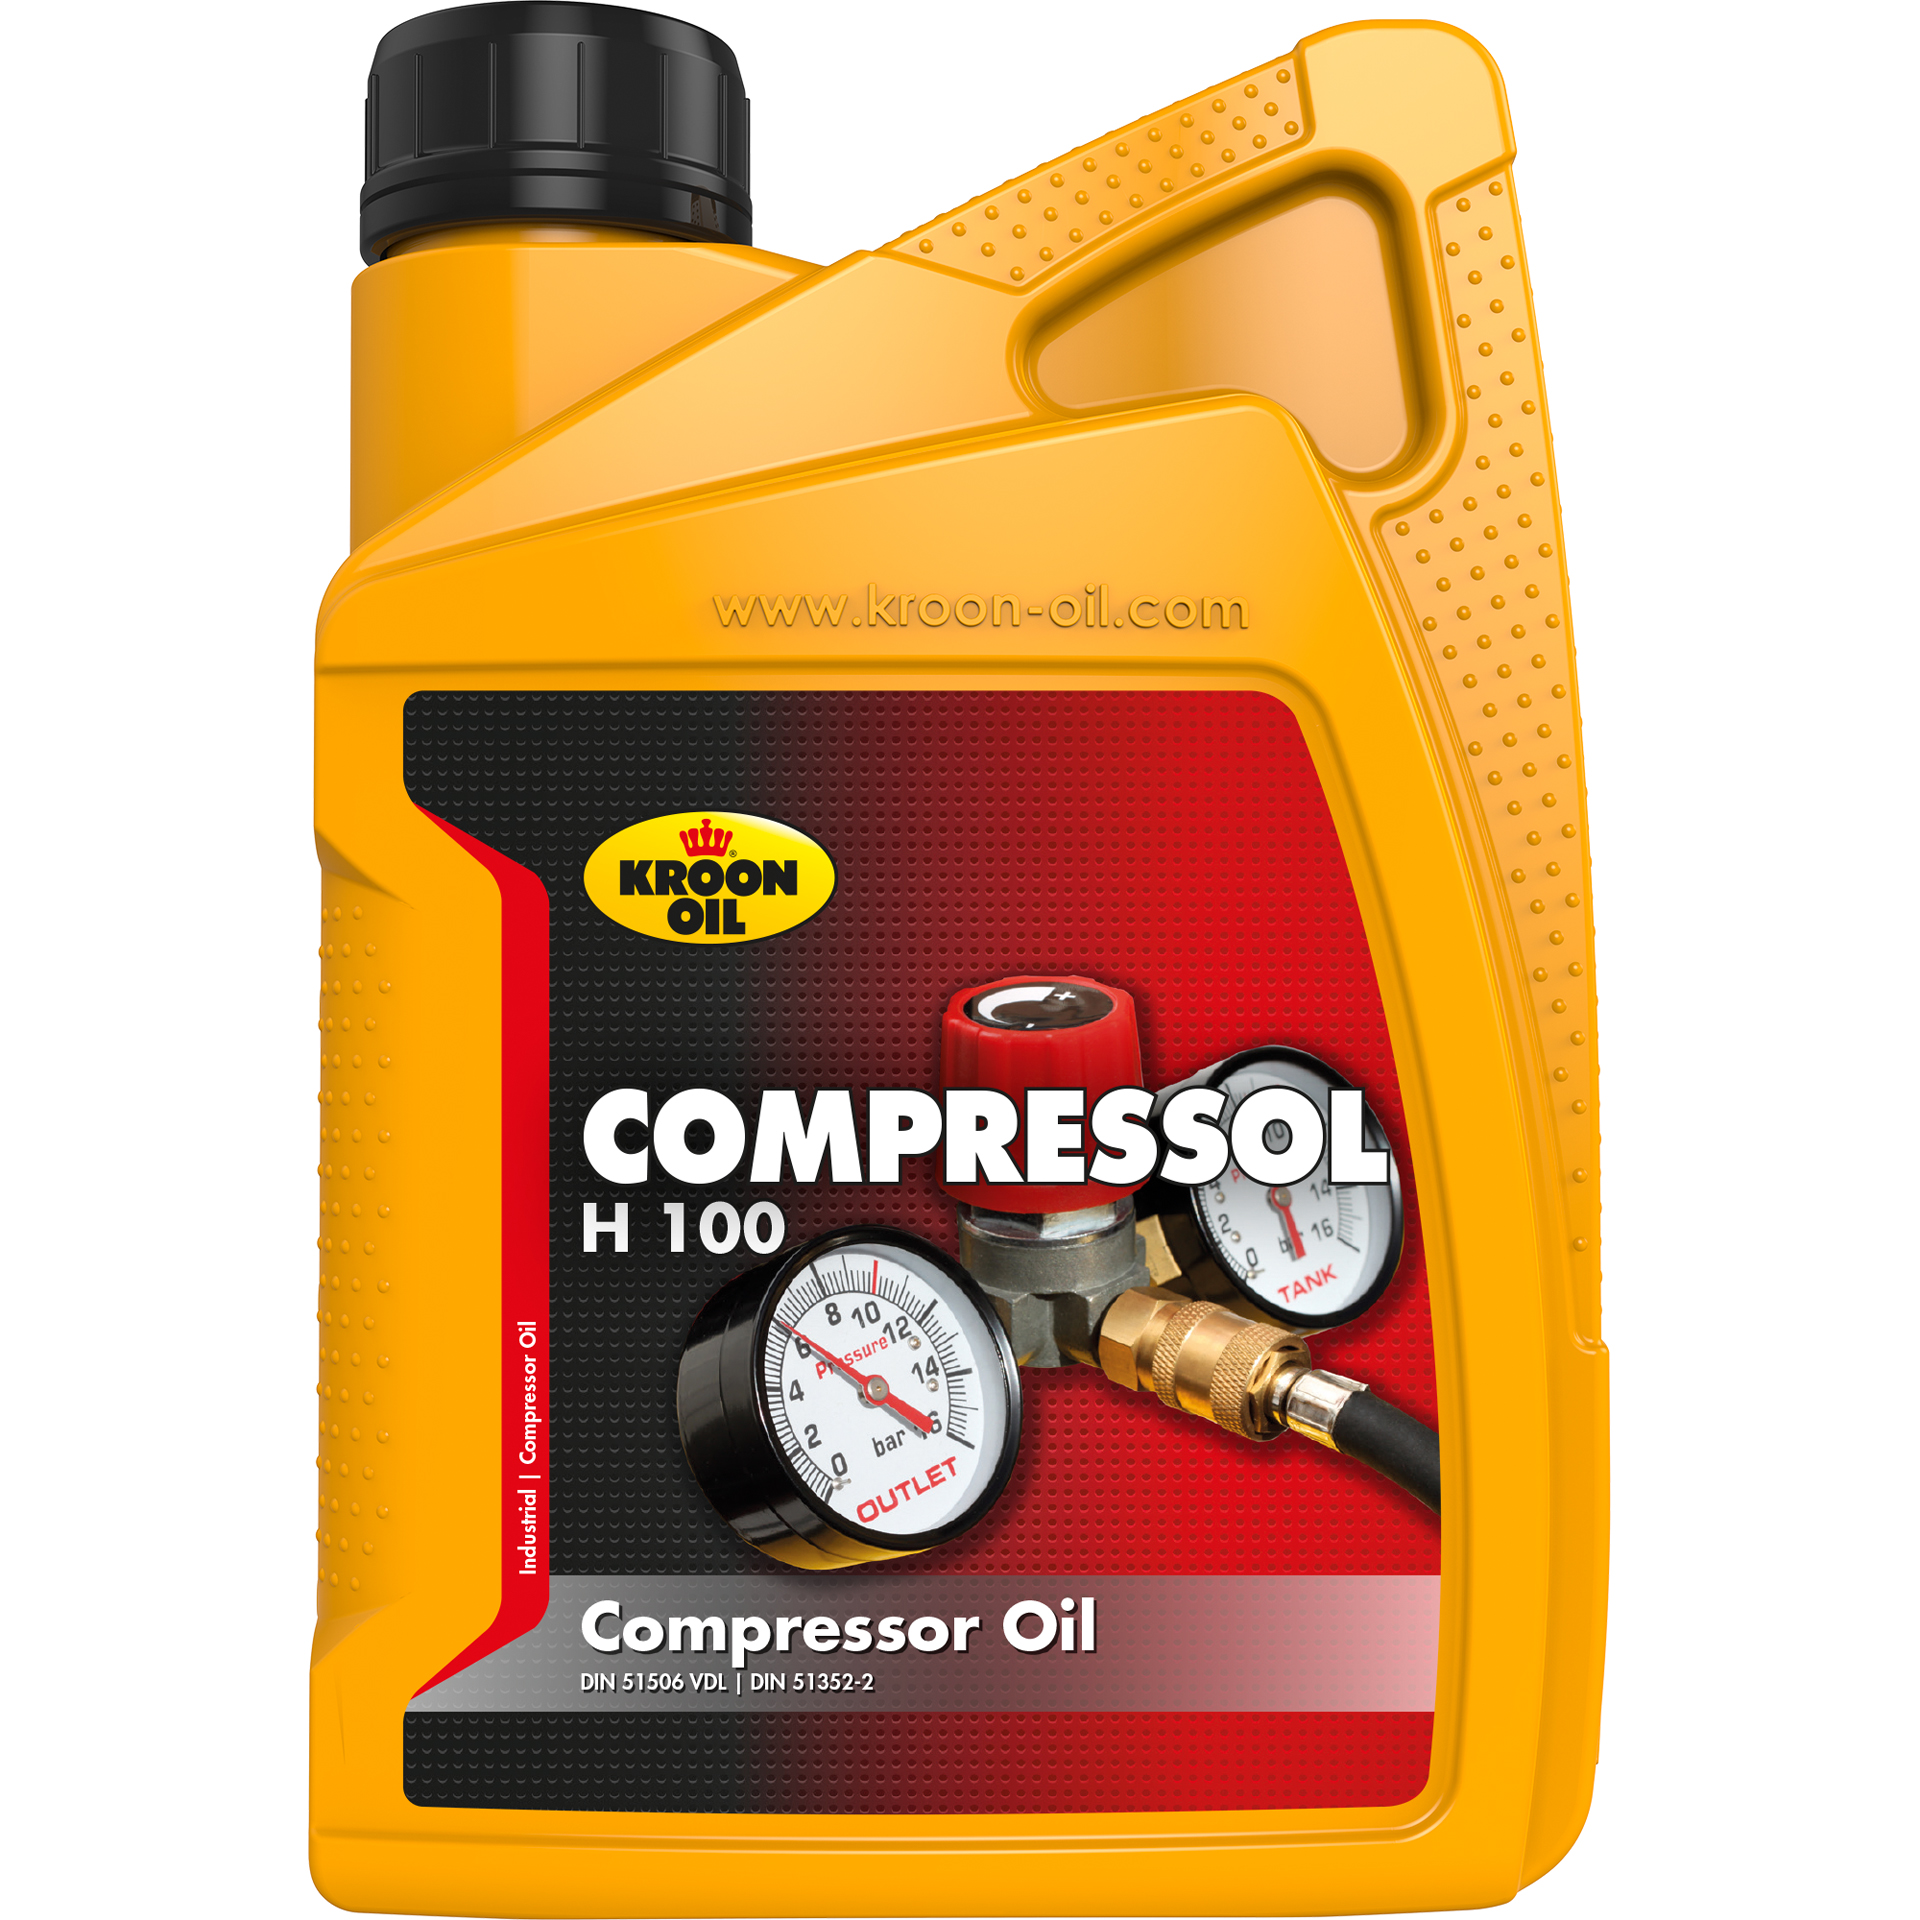 Kroon-Oil Compressol H100 1 Liter (1838232)